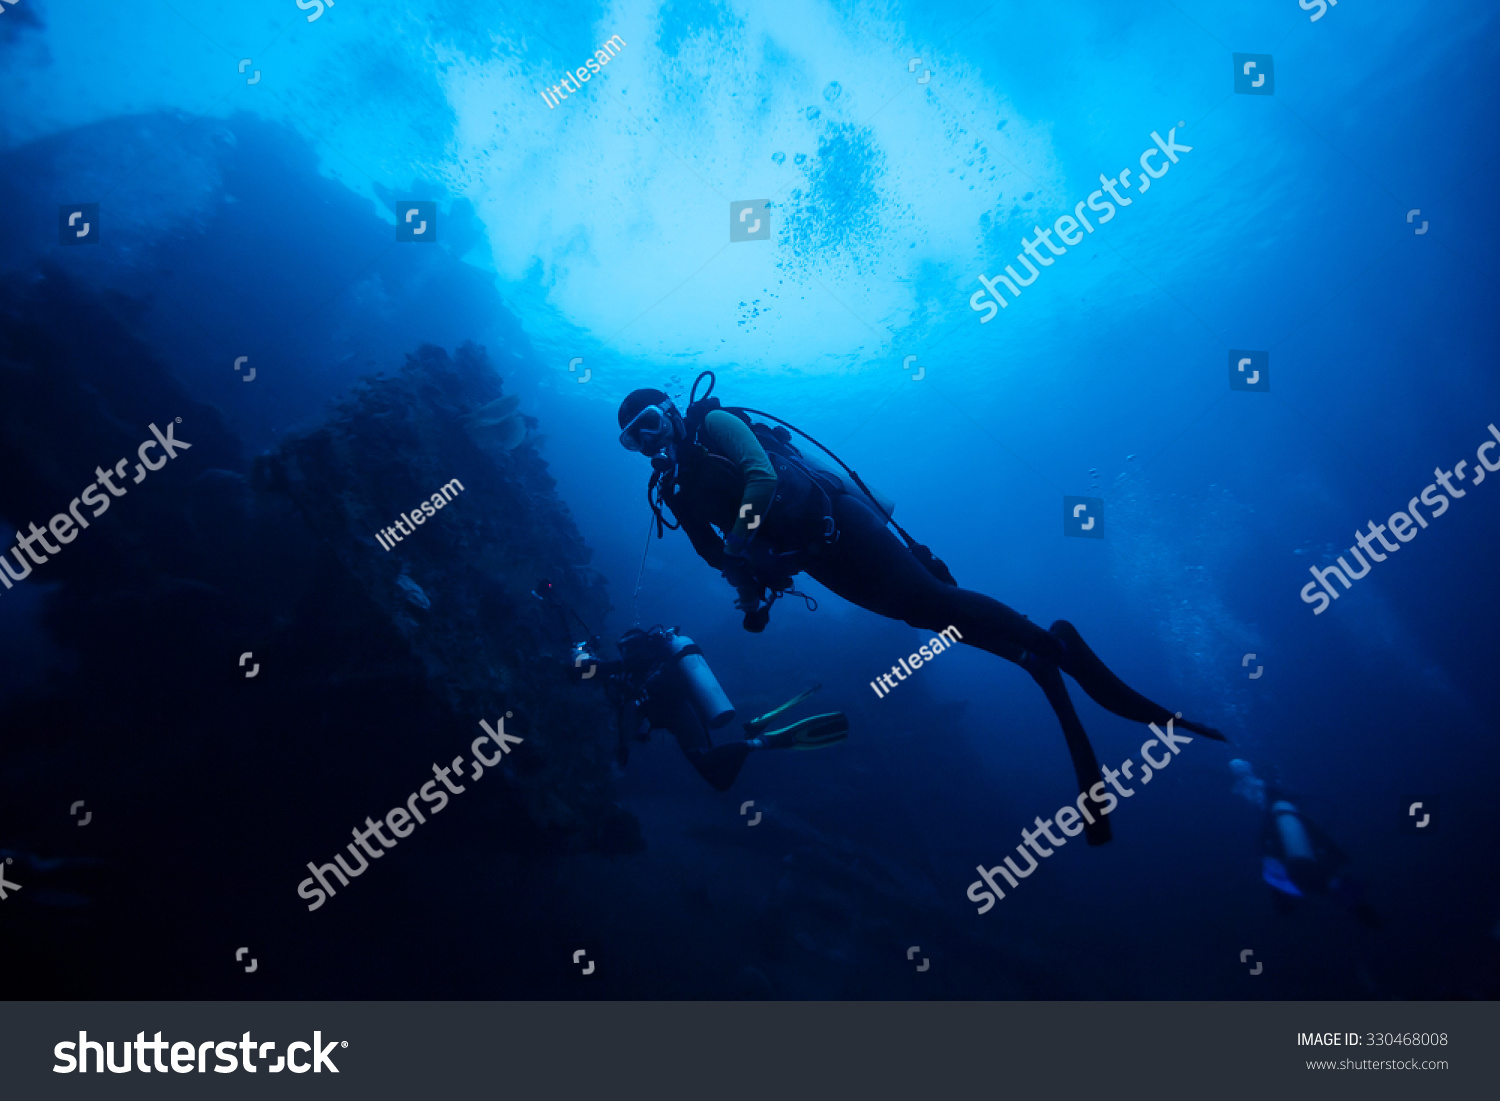 silhouette of diver underwater #330468008